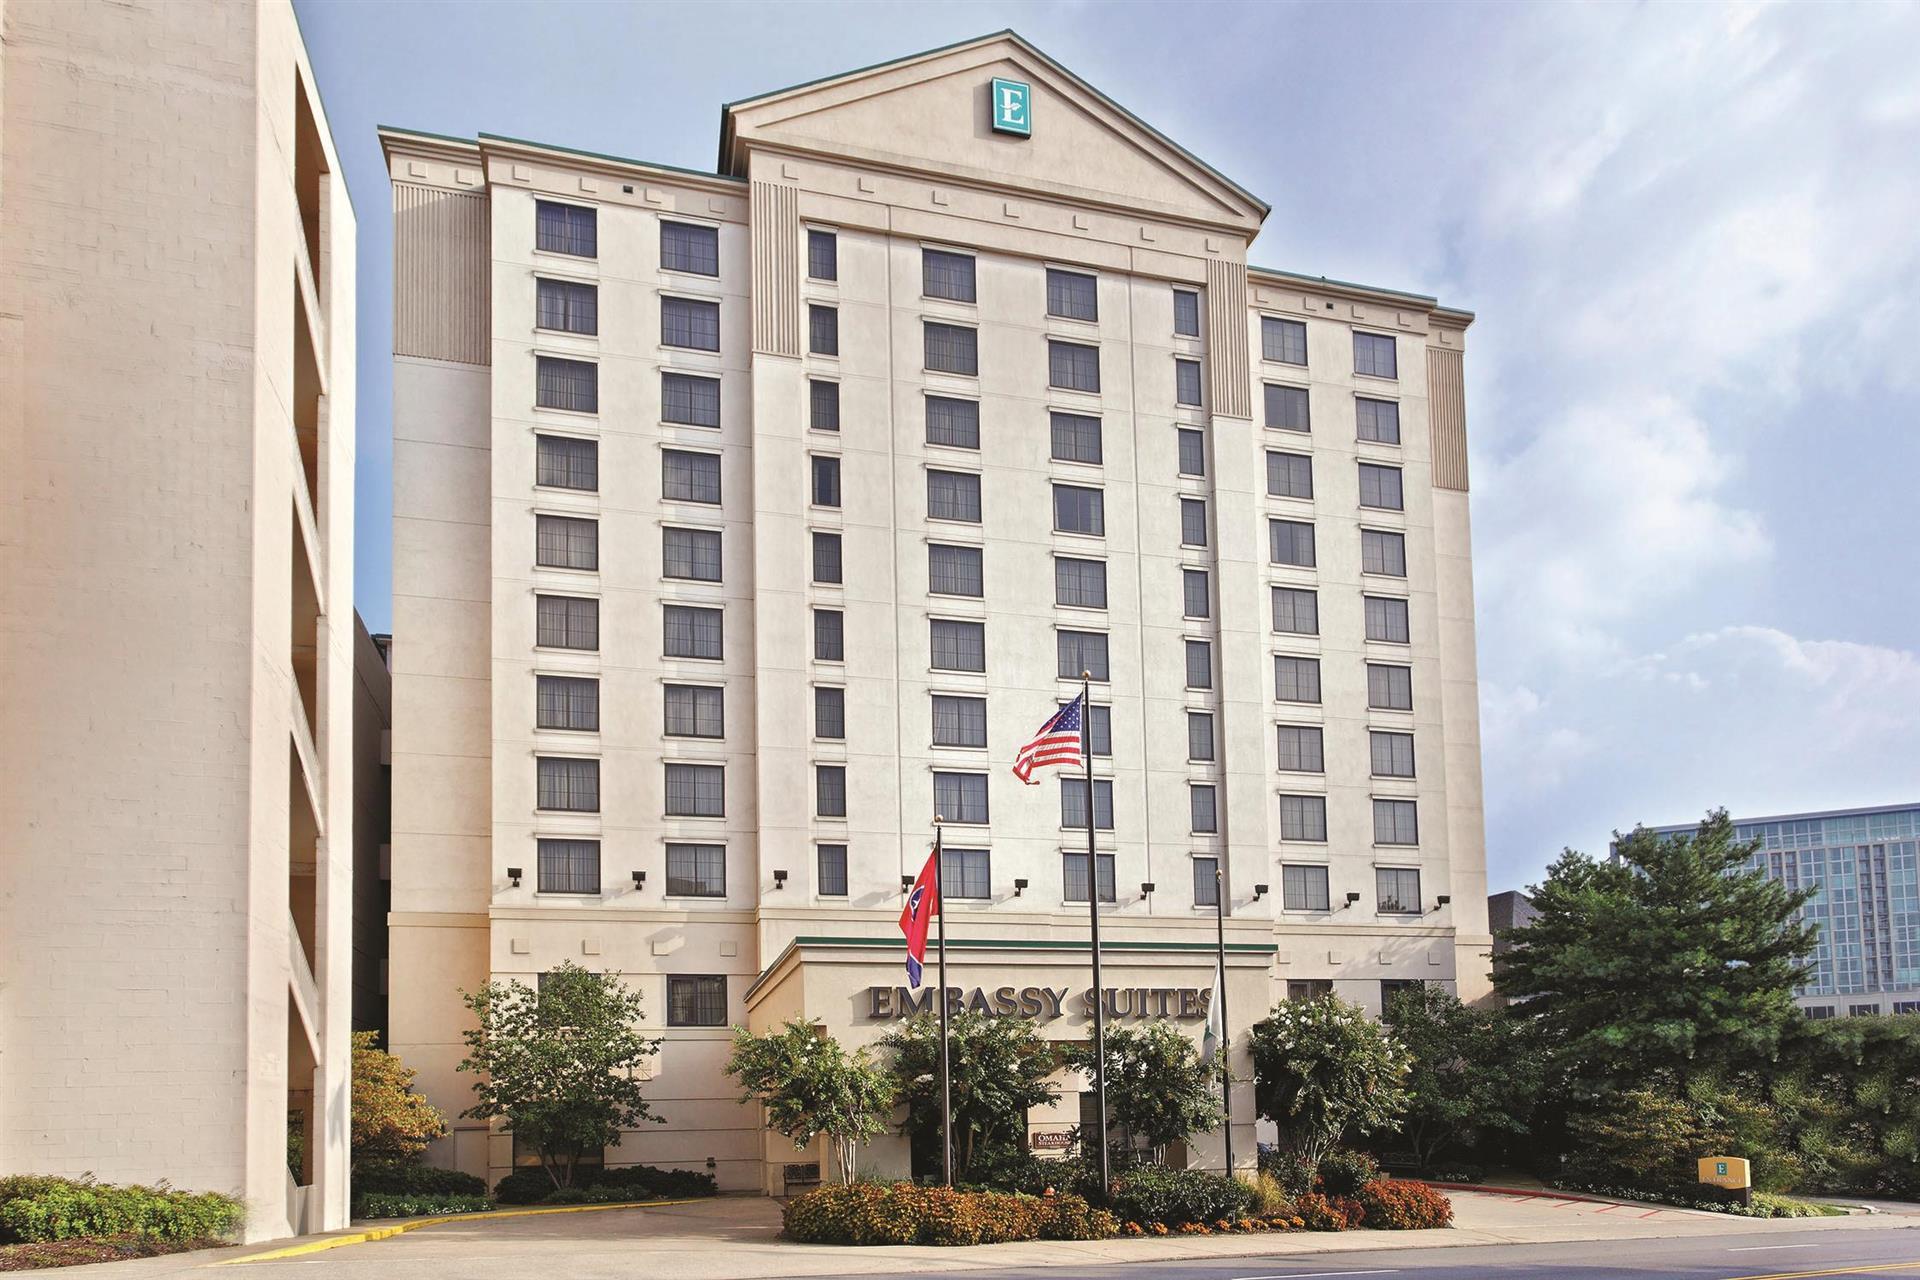 Embassy Suites by Hilton Nashville at Vanderbilt in Nashville, TN